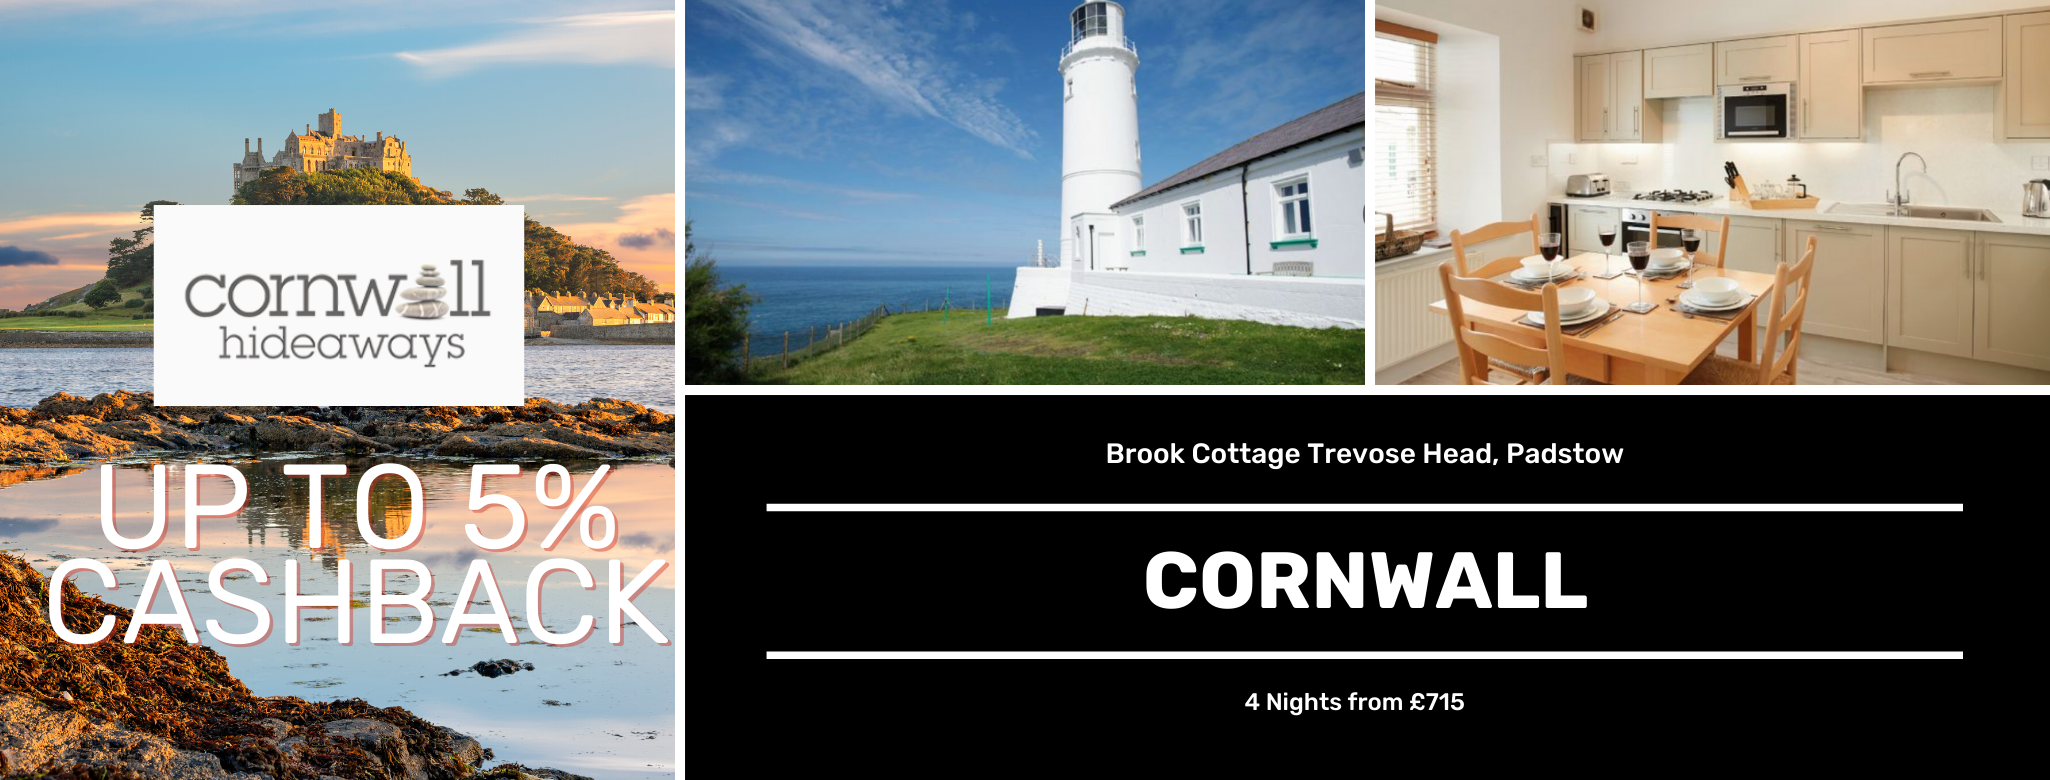 Cornwall Hideaways Cornwall Up to 5% Cashback